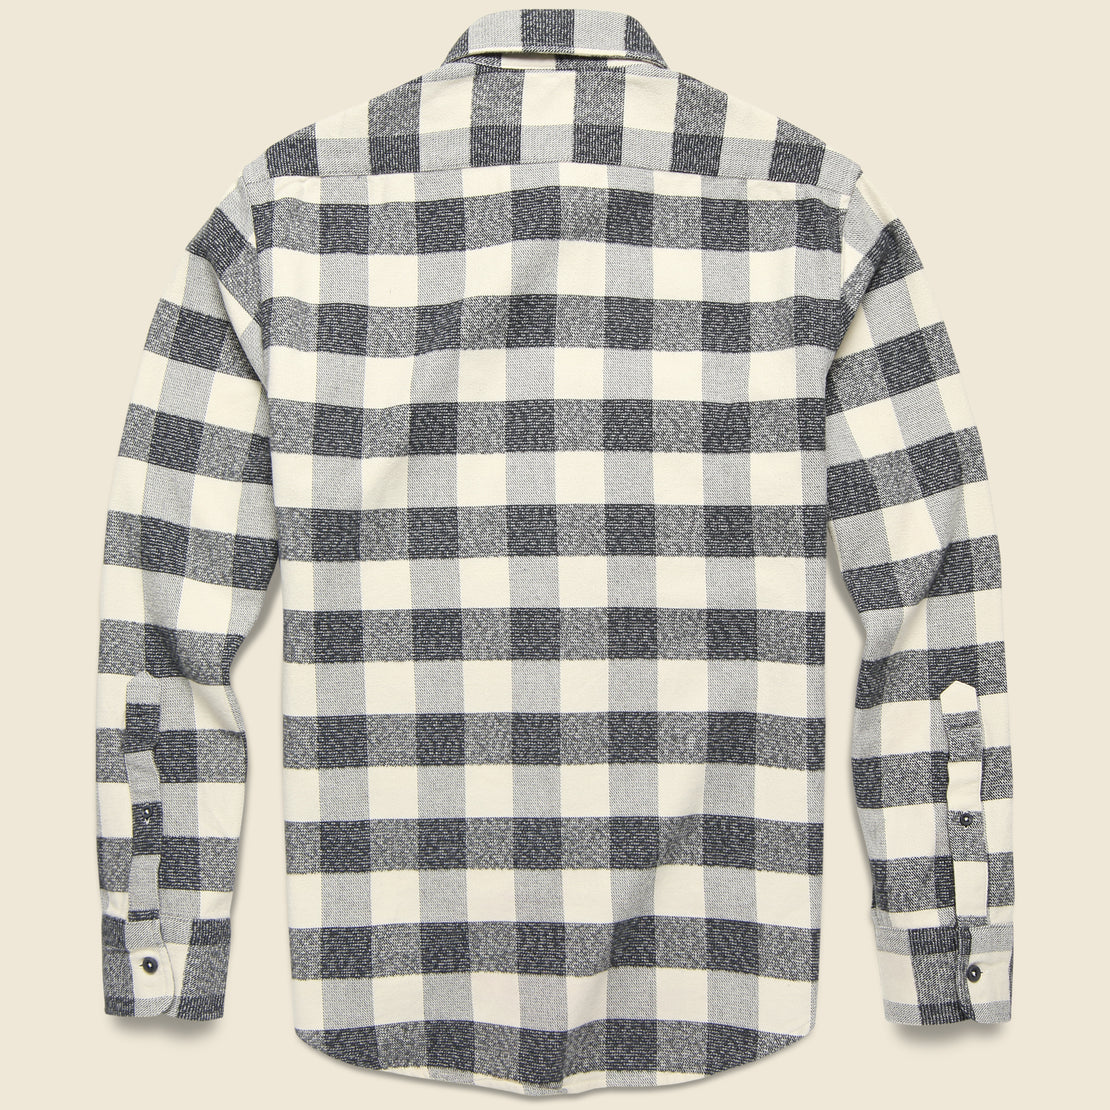 Yosemite Shirt - Birch Buffalo Check - Taylor Stitch - STAG Provisions - Tops - L/S Woven - Plaid